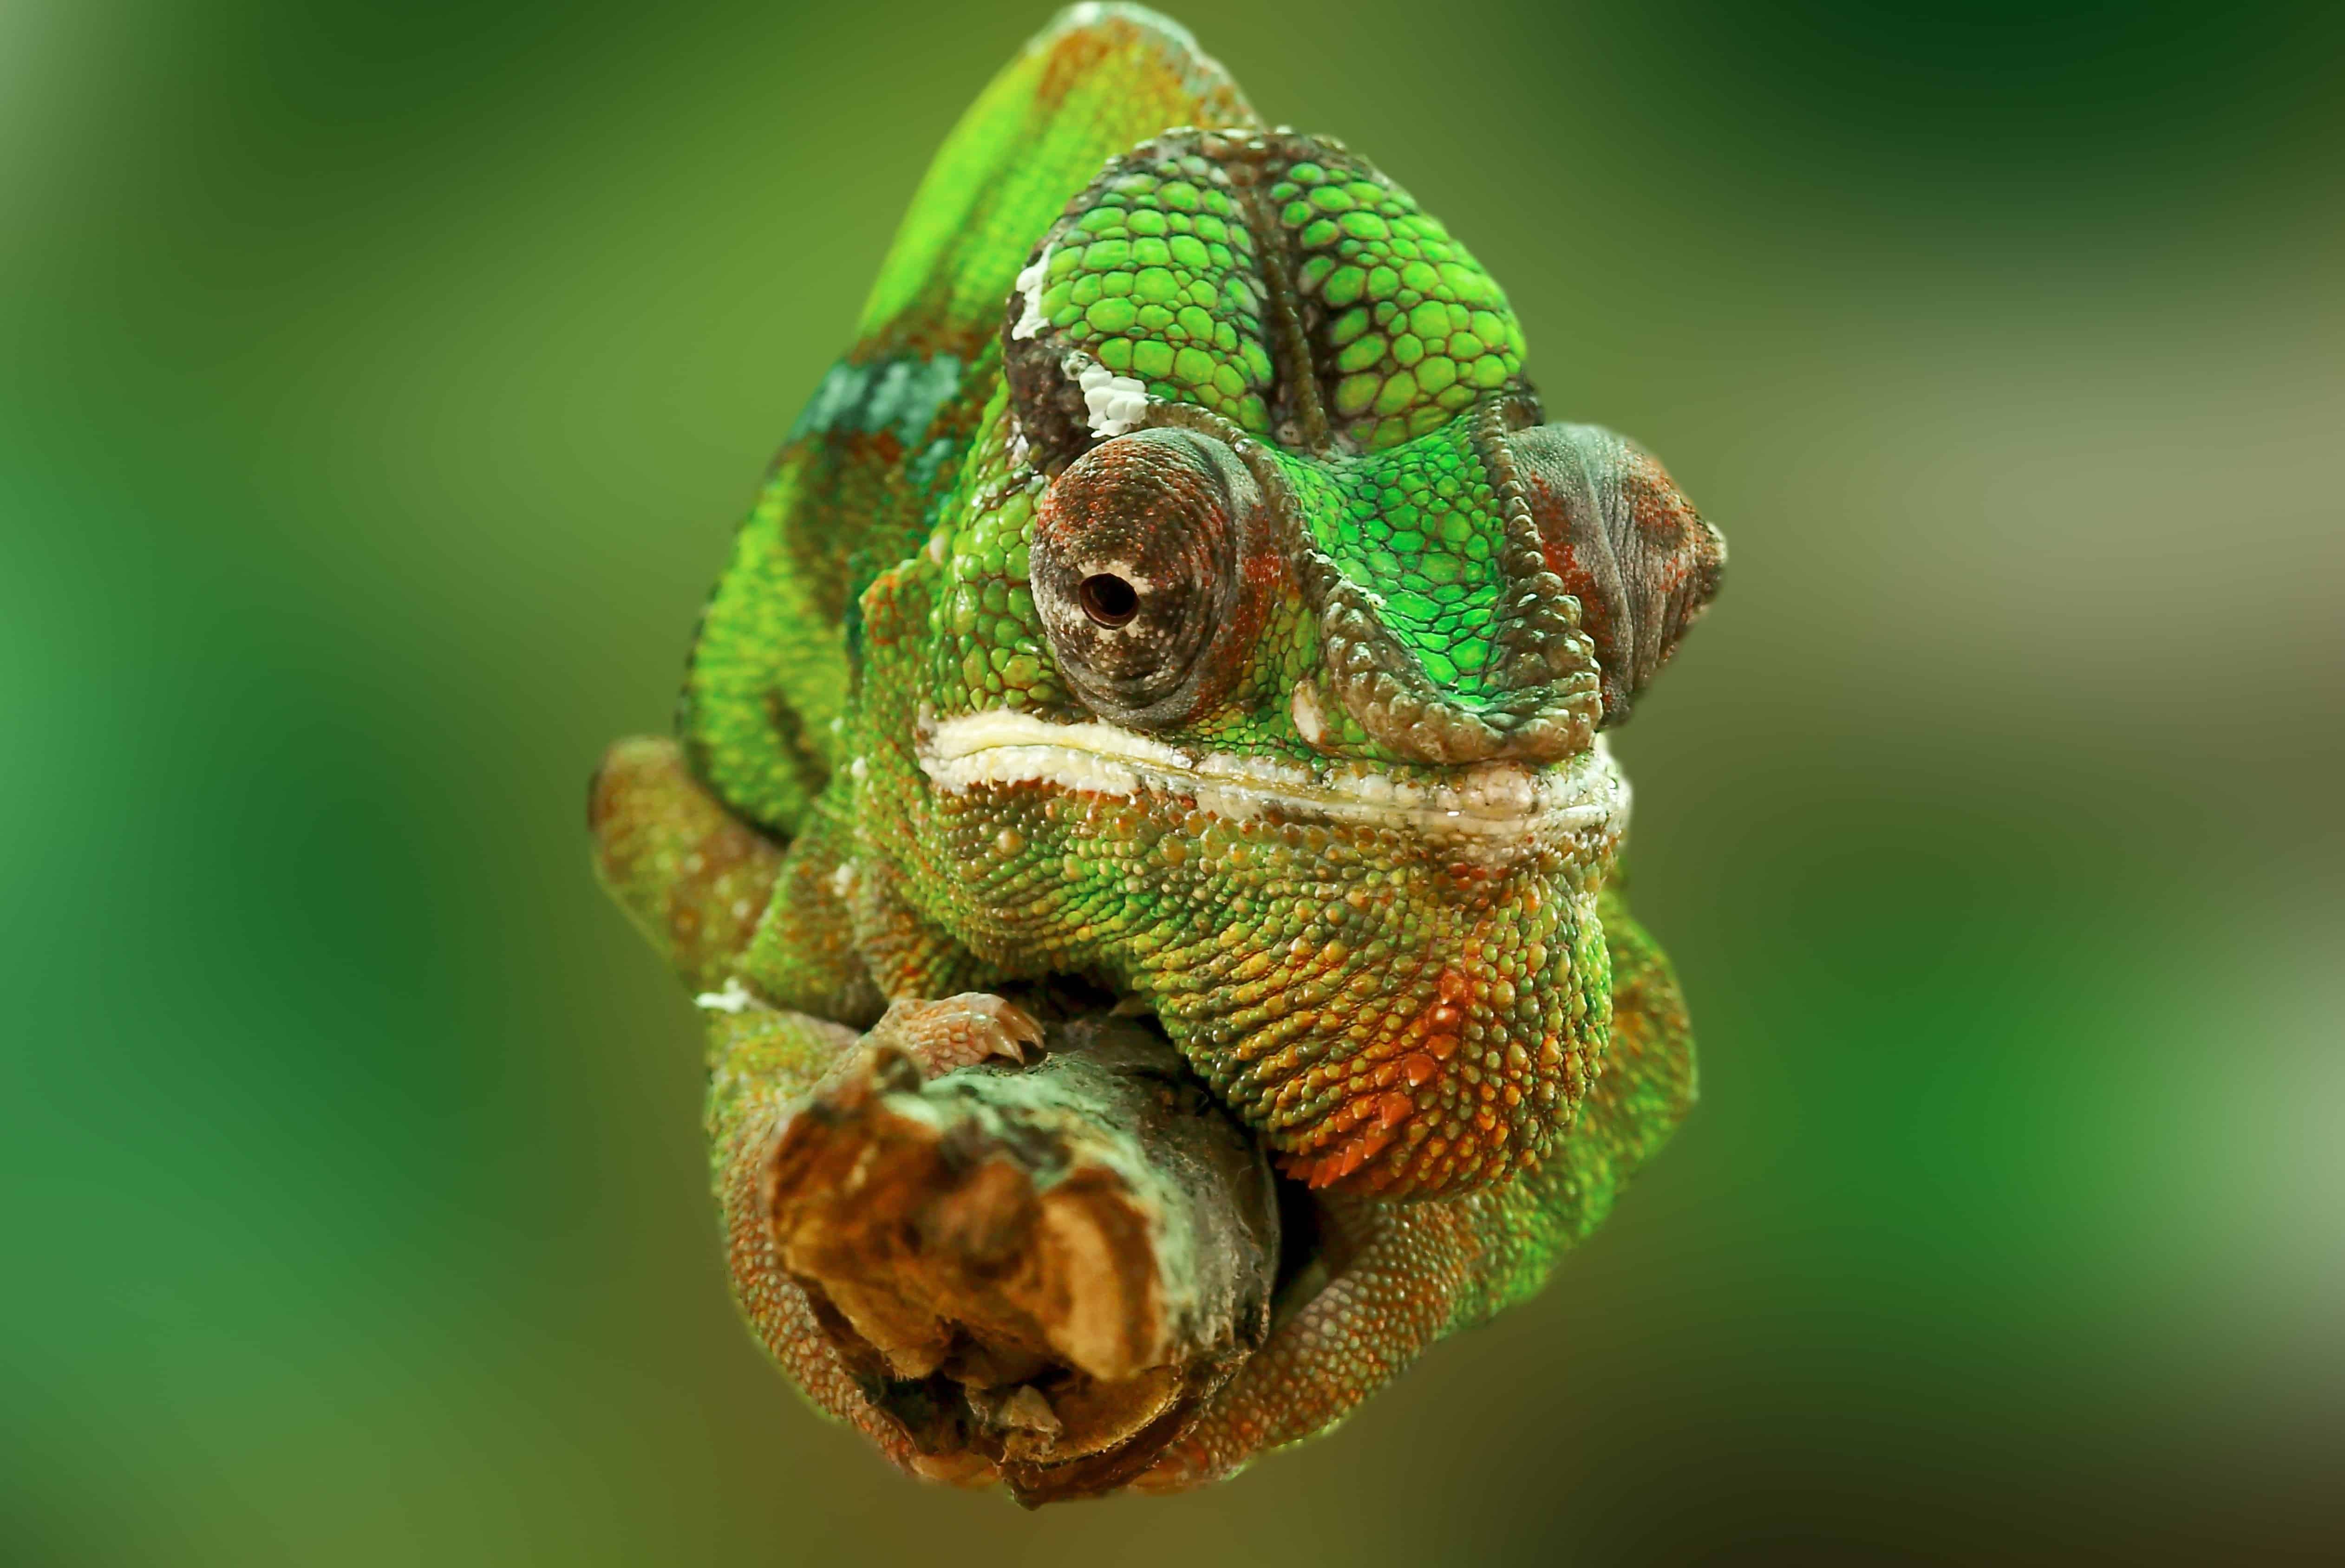 chameleon camouflage